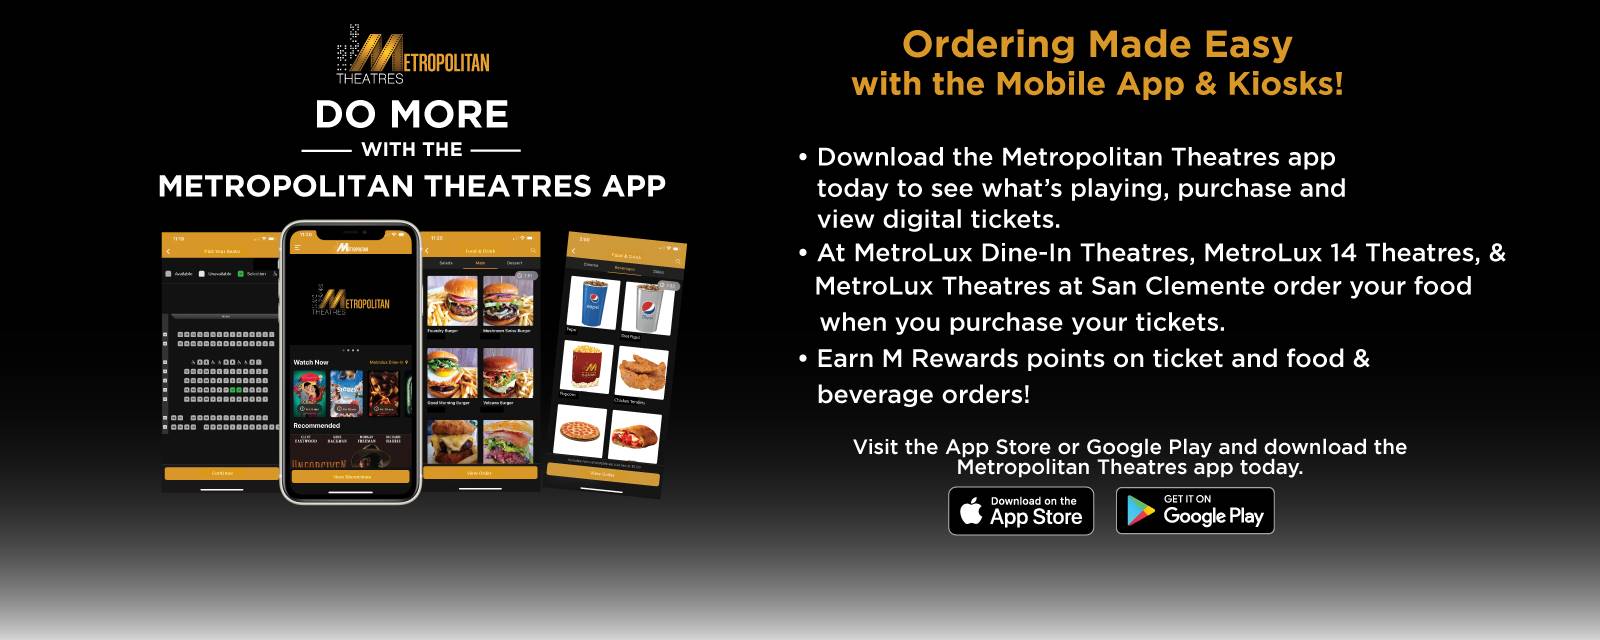 Mobile App Ordering